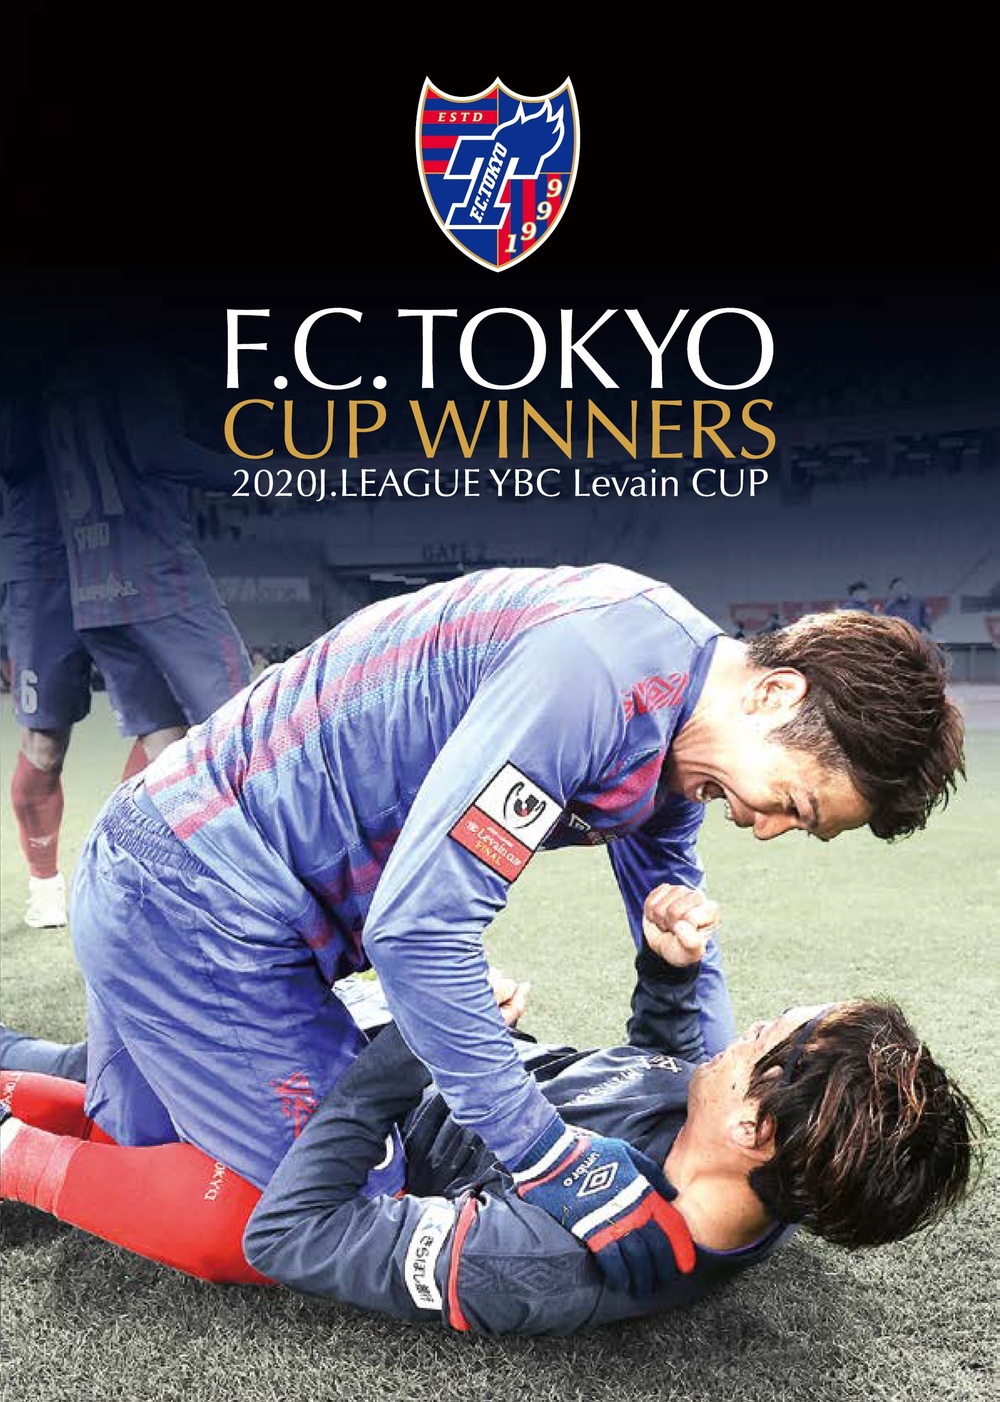 FC東京 Blu-ray DVD ルヴァンカップ 優勝 2020 サッカー